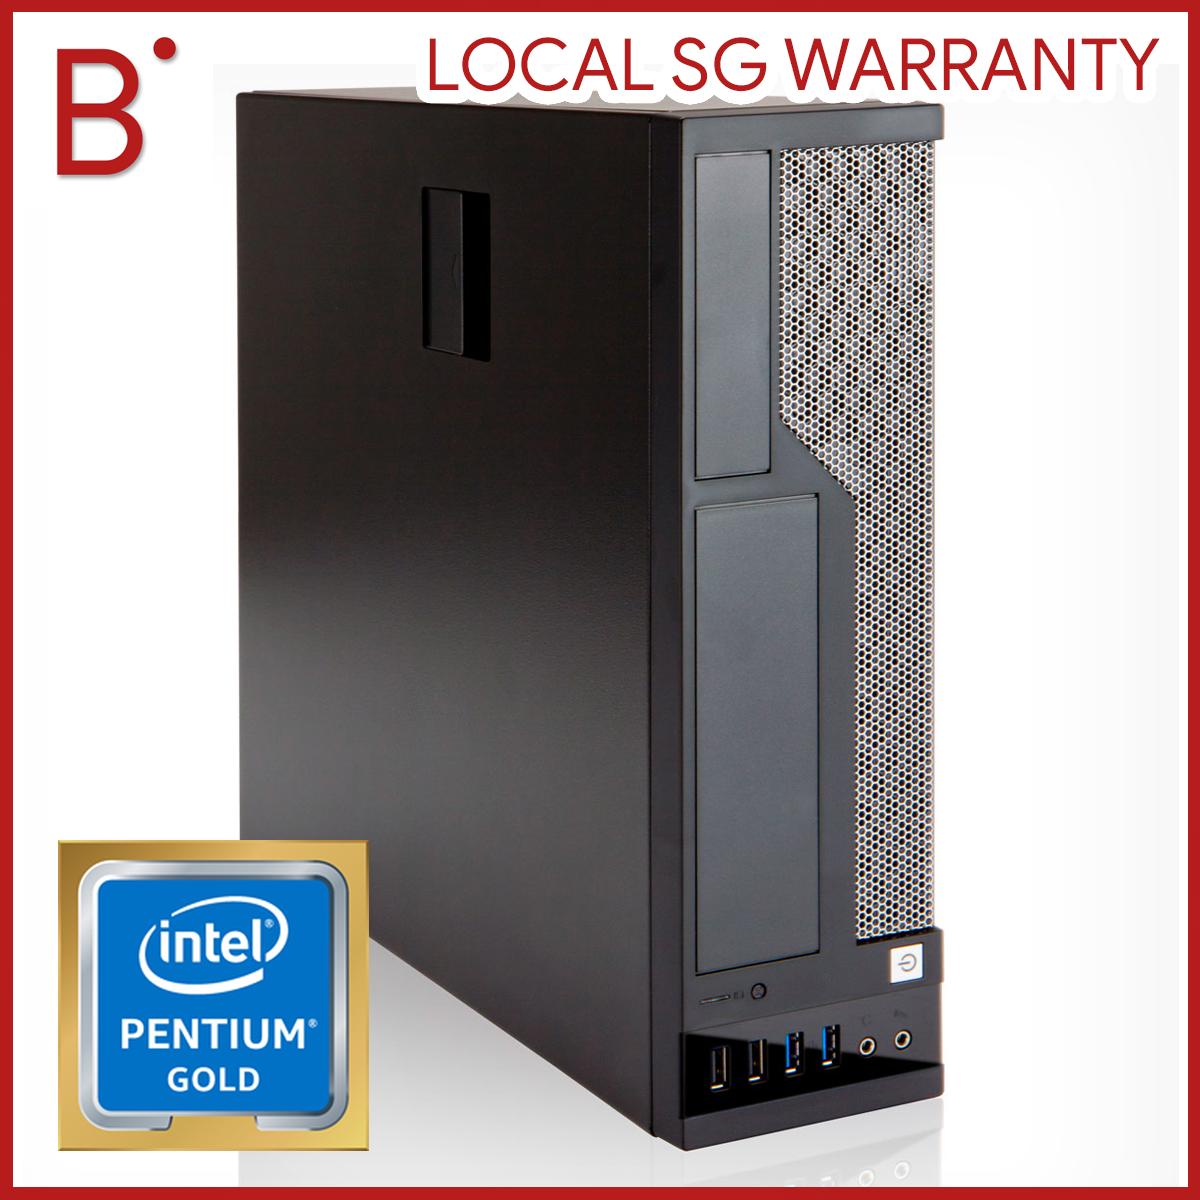 Intel 8th Gen PC, 4K HDMI, G5400 Gold CPU, 1TB, HD Graphics, Small Form Factor Desktop